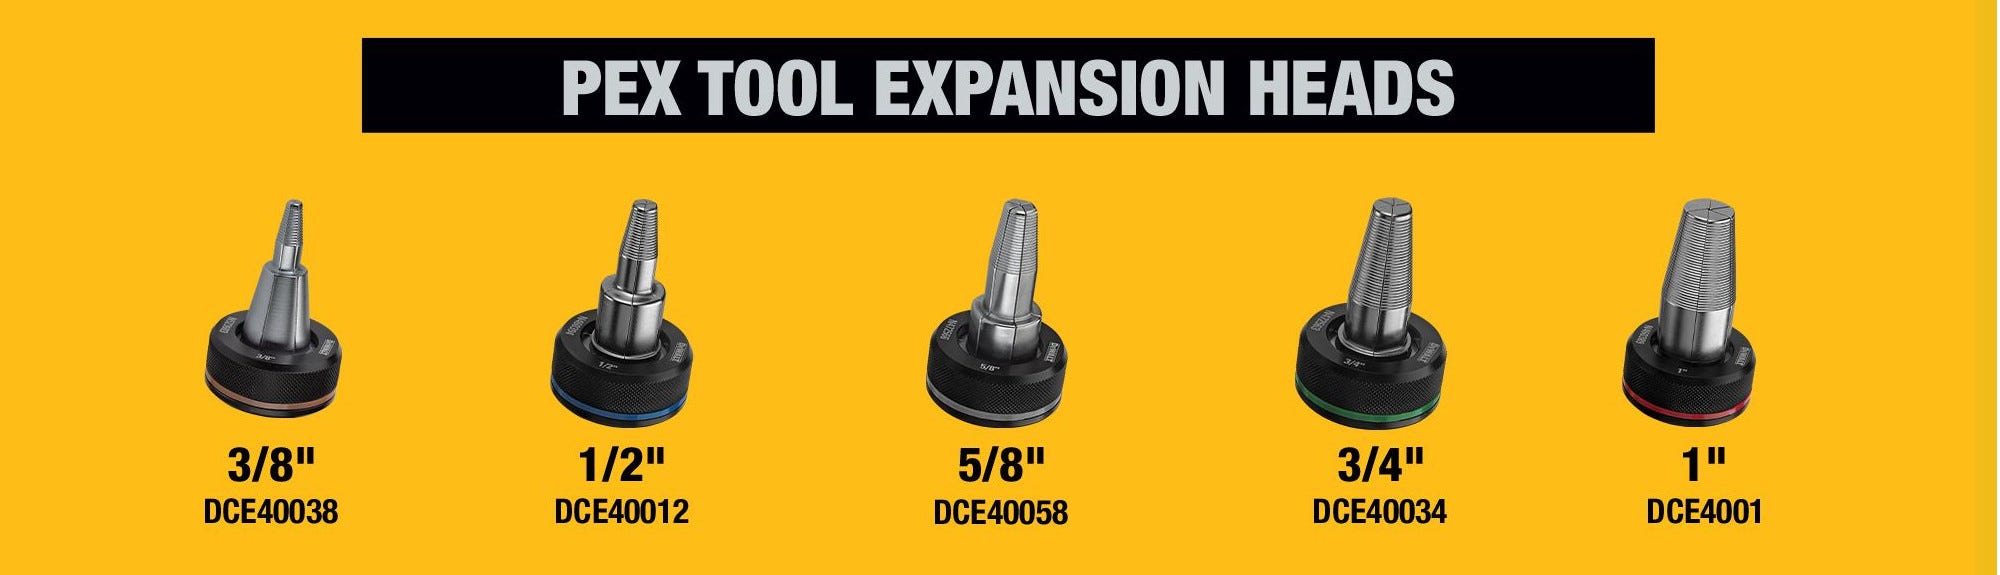 DEWALT 20V MAX* Pex Expander Tool, 1-Inch, Tool Only (DCE400B) - 2